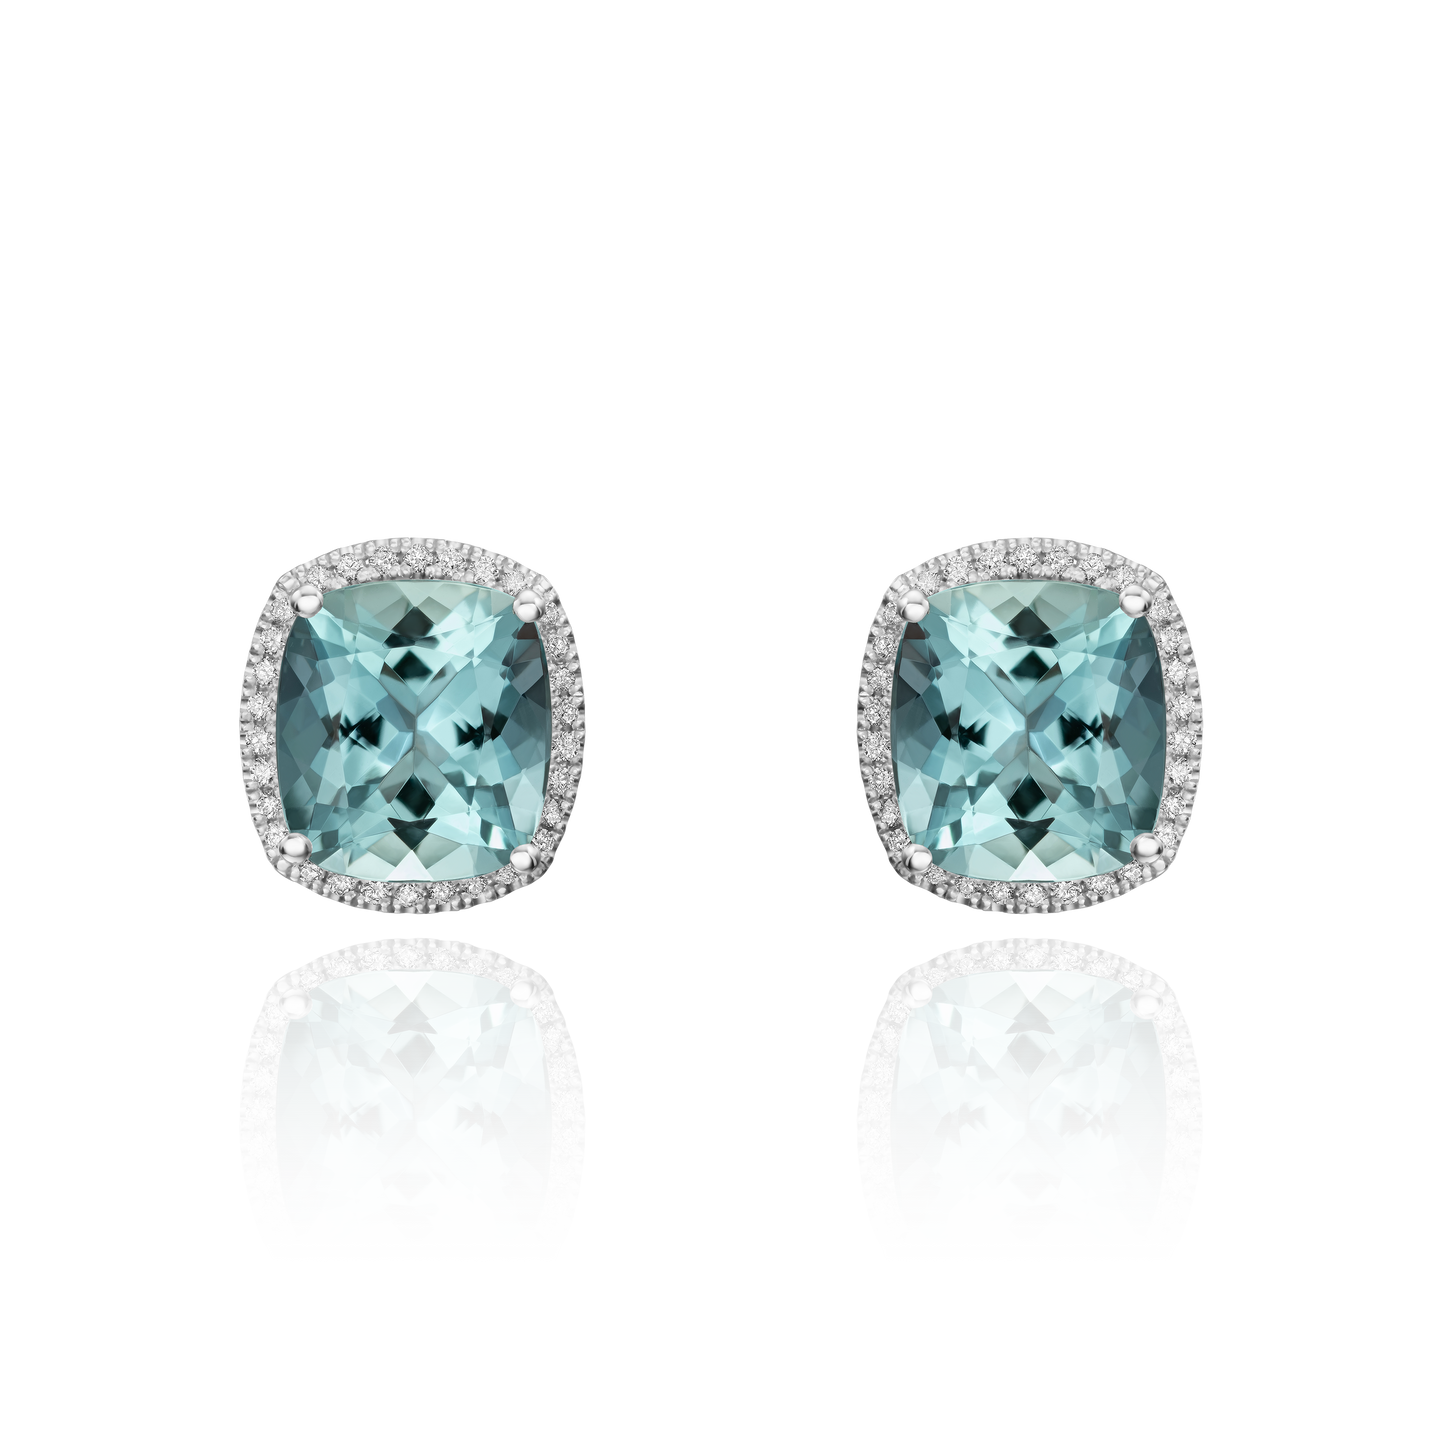 8.01cts Cushion-Cut Aquamarine and Diamond Earrings